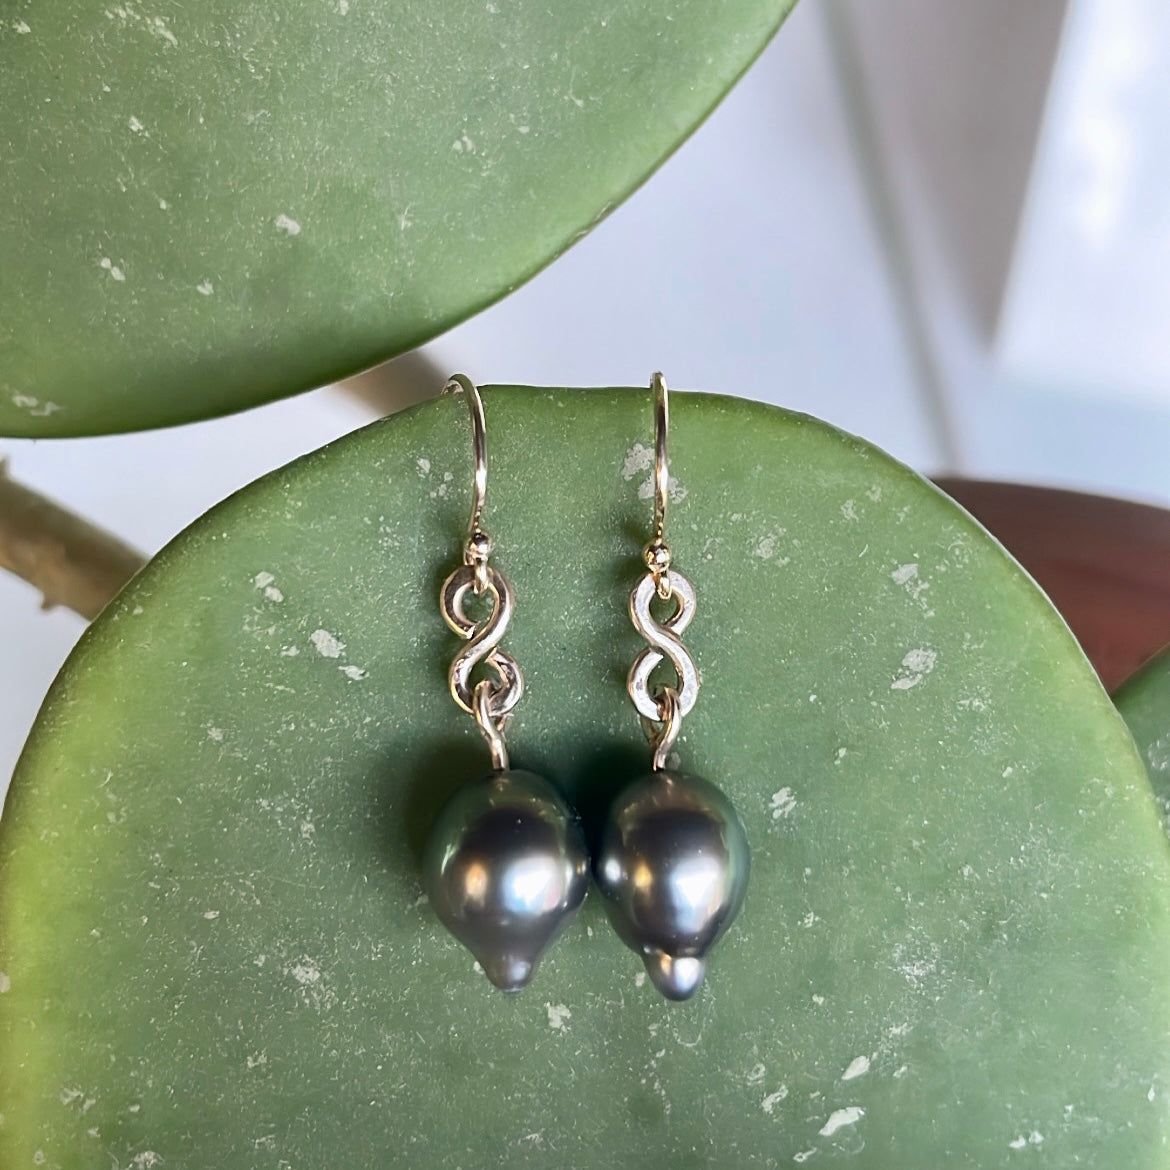 Figure 8 black pearls earrings-serena kojimoto studio